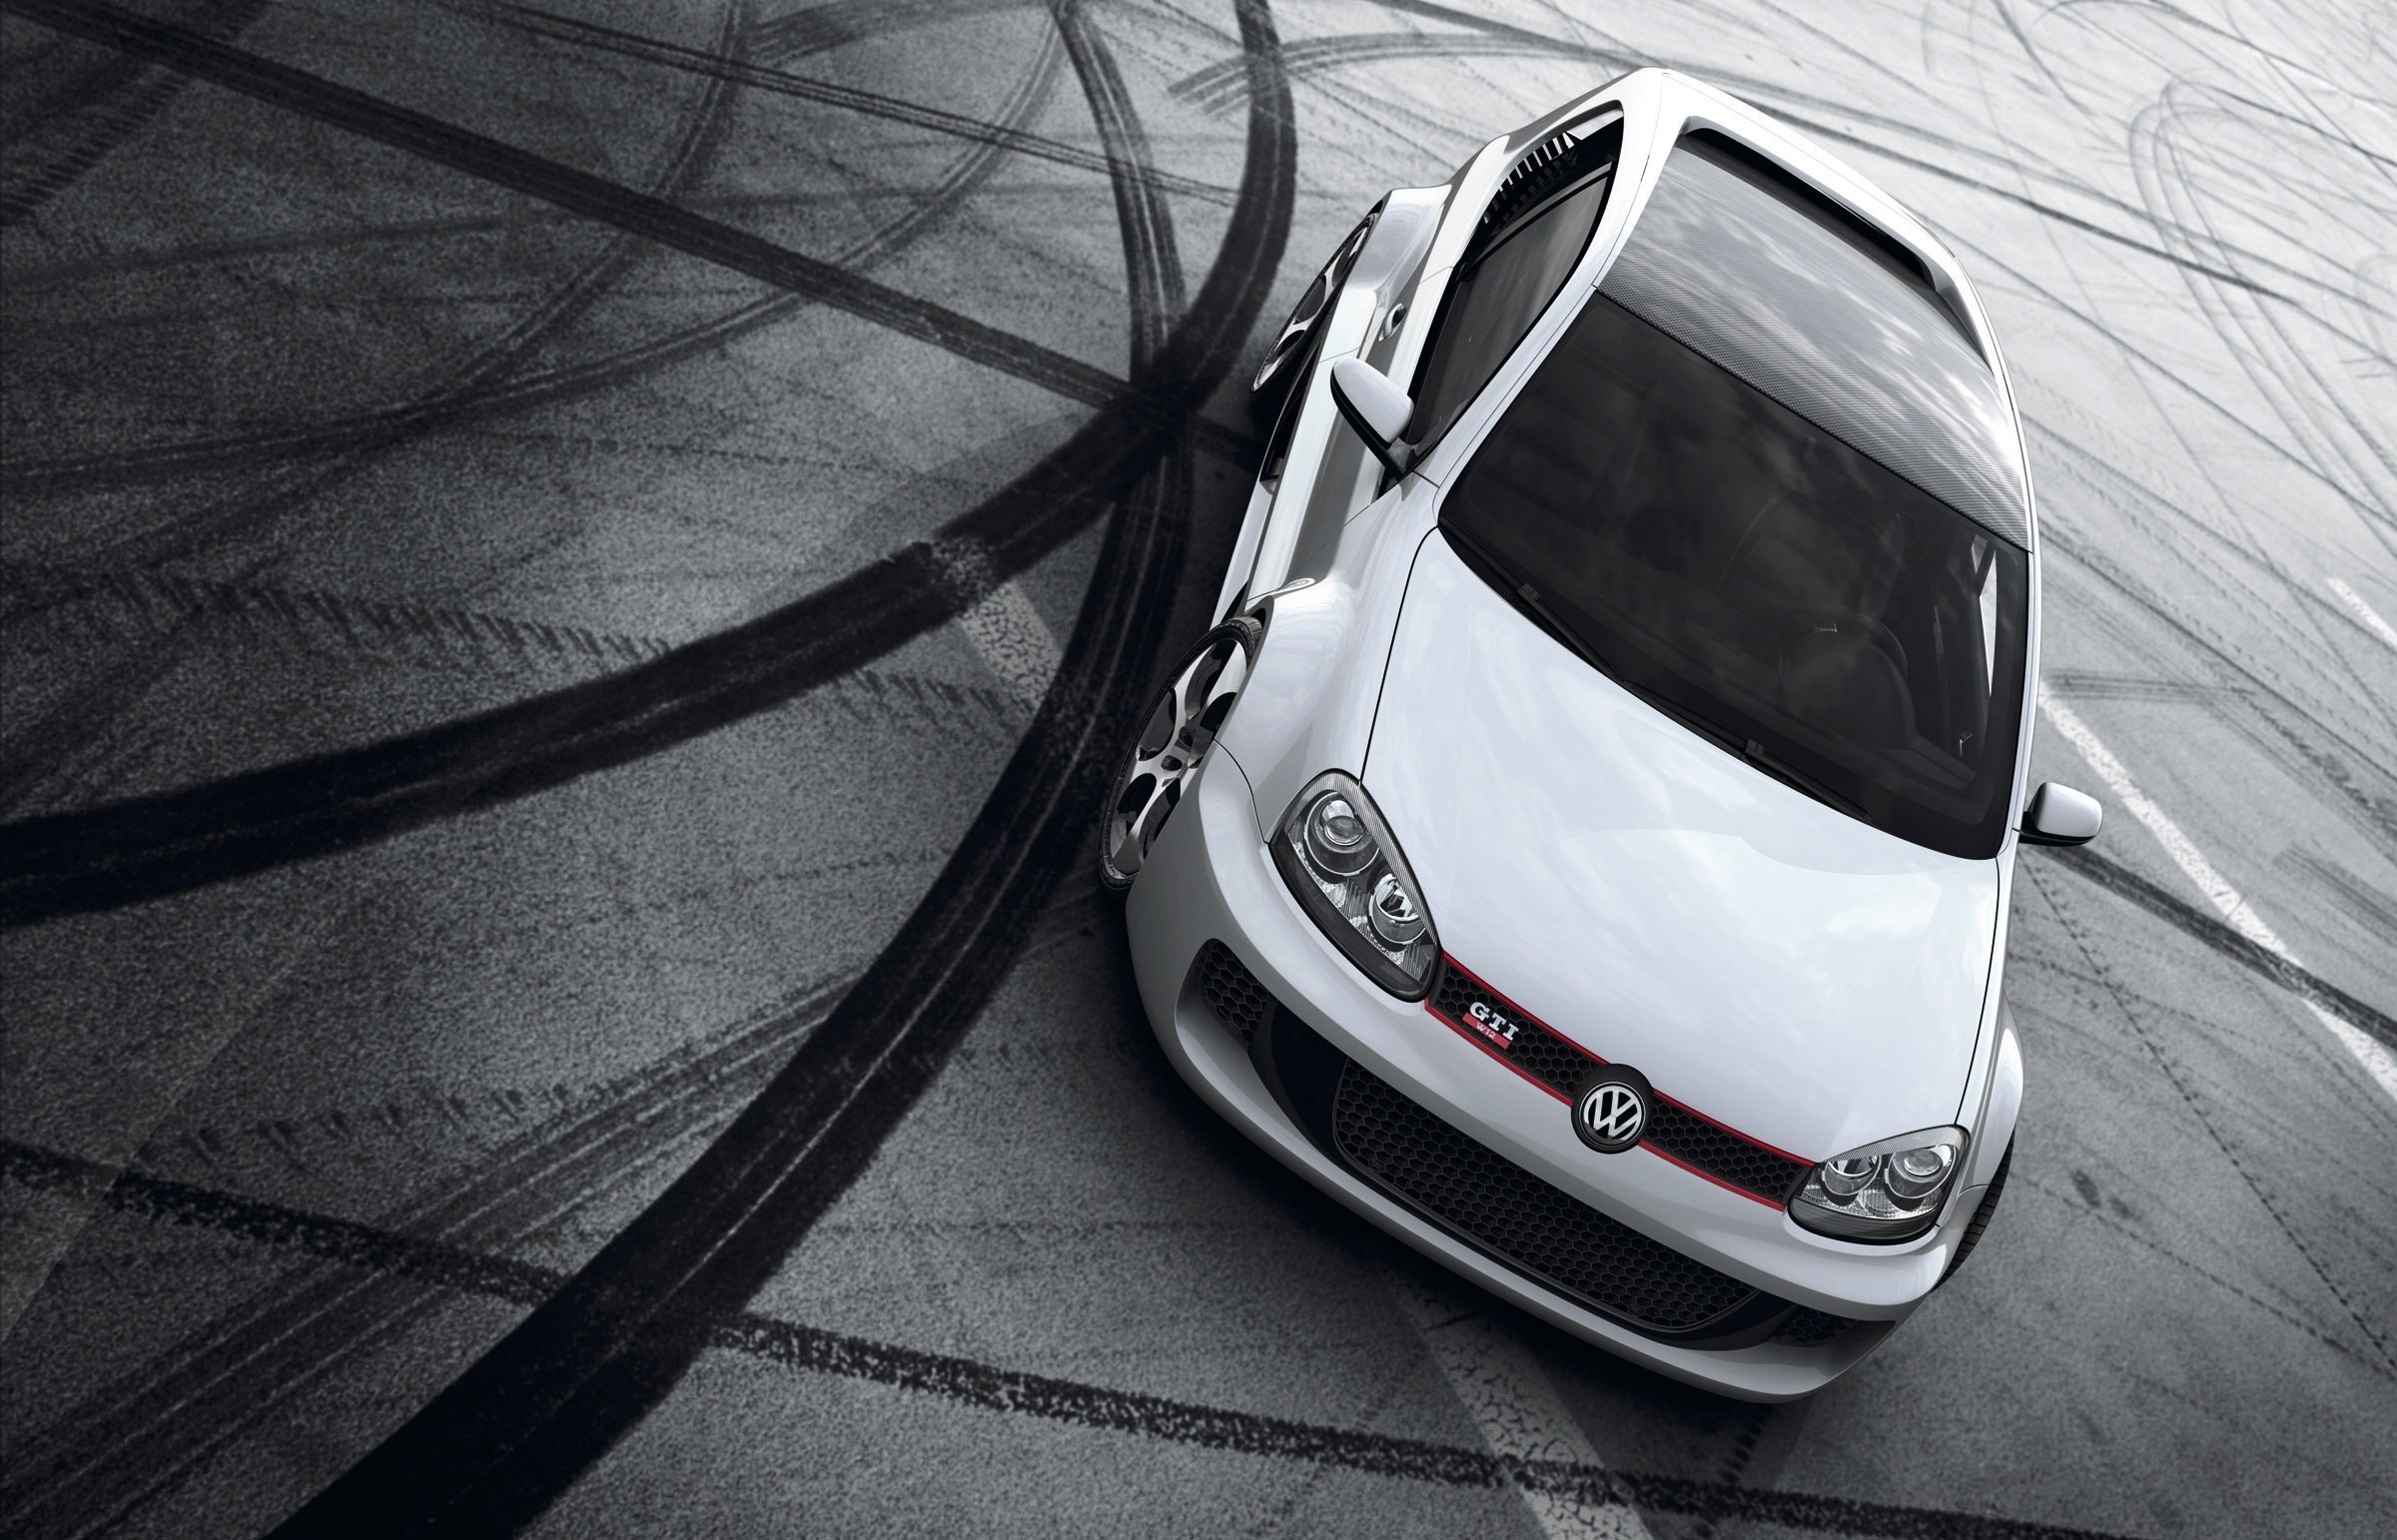 Golf GTI: Volkswagen, Went under the Rabbit moniker for the MK5 Generation in North America. 2400x1550 HD Background.